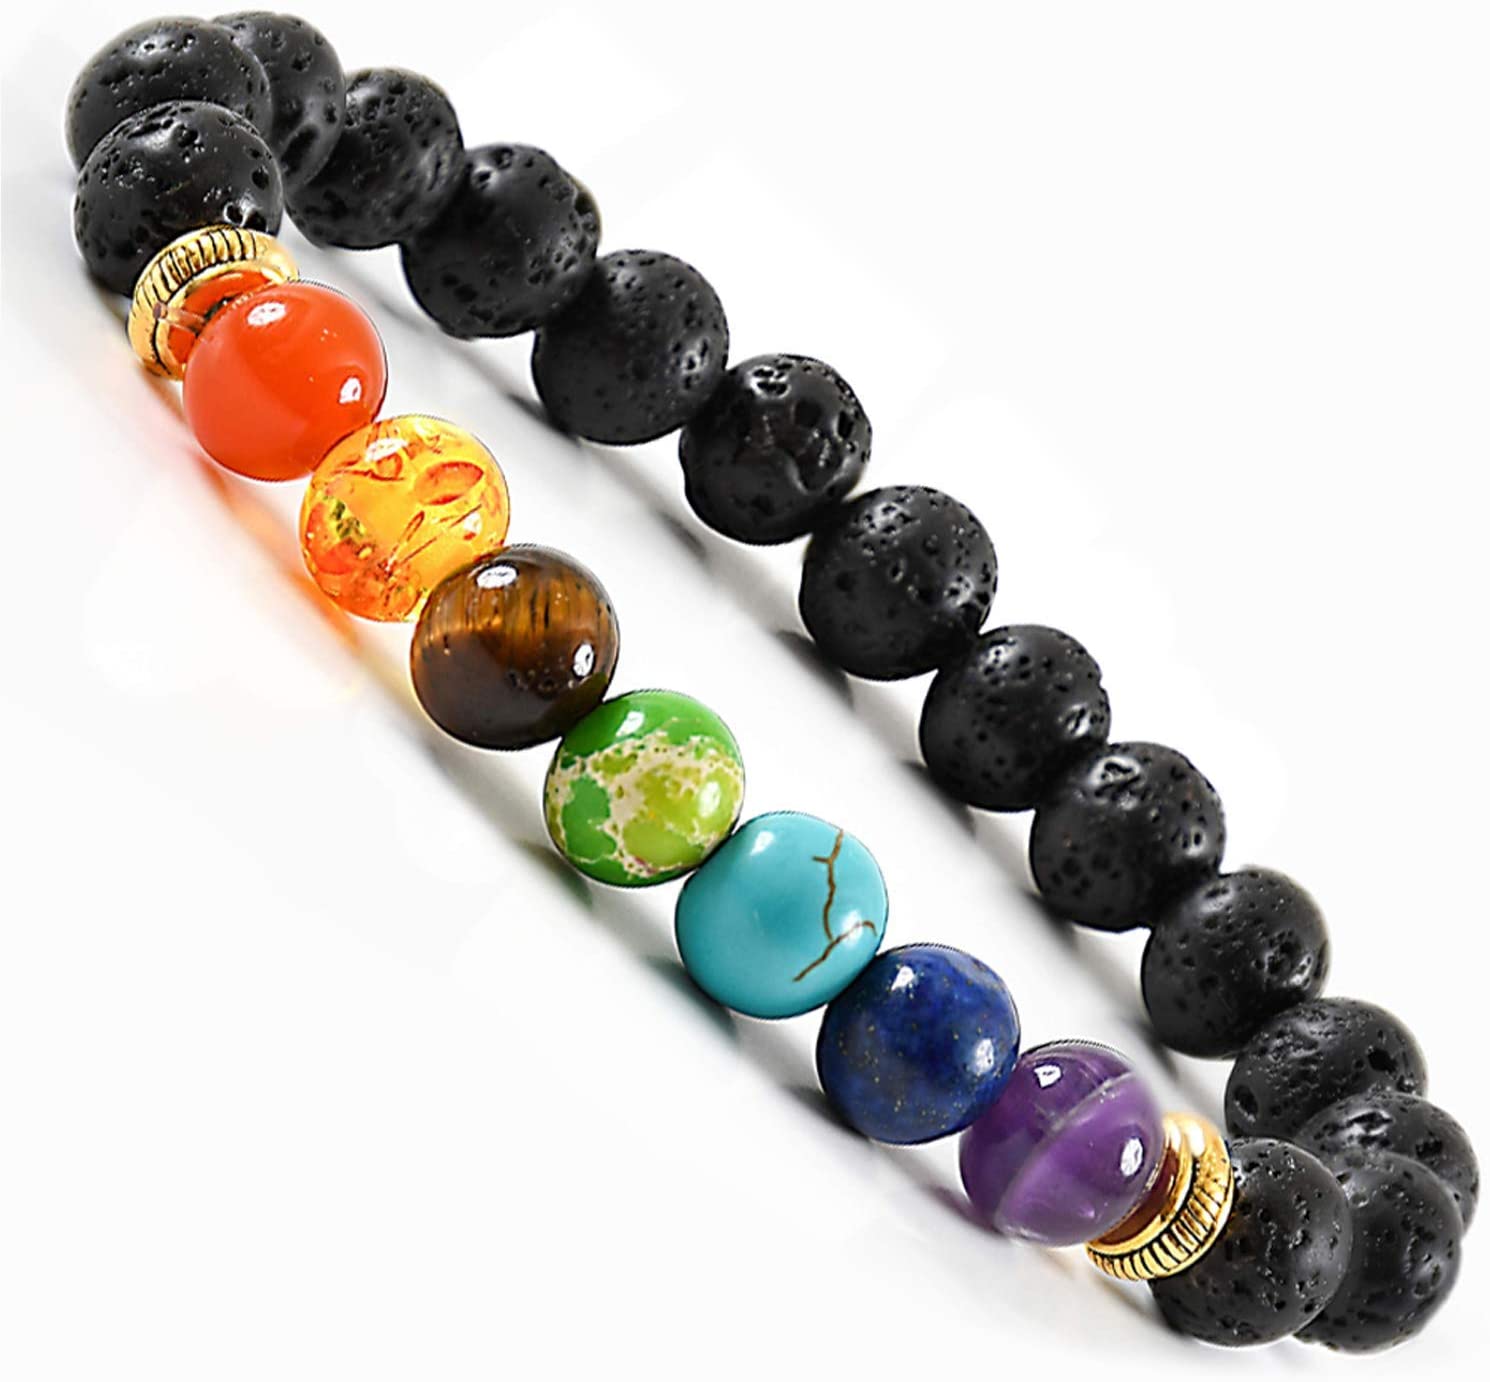 Wonder Care Healing Natural Gemstone Yoga Meditation 8mm Beads Bracelet Reiki Anxiety Stress Relief Balancing Lava Wrist Band Unisex Adjustable Bracelet Gift 